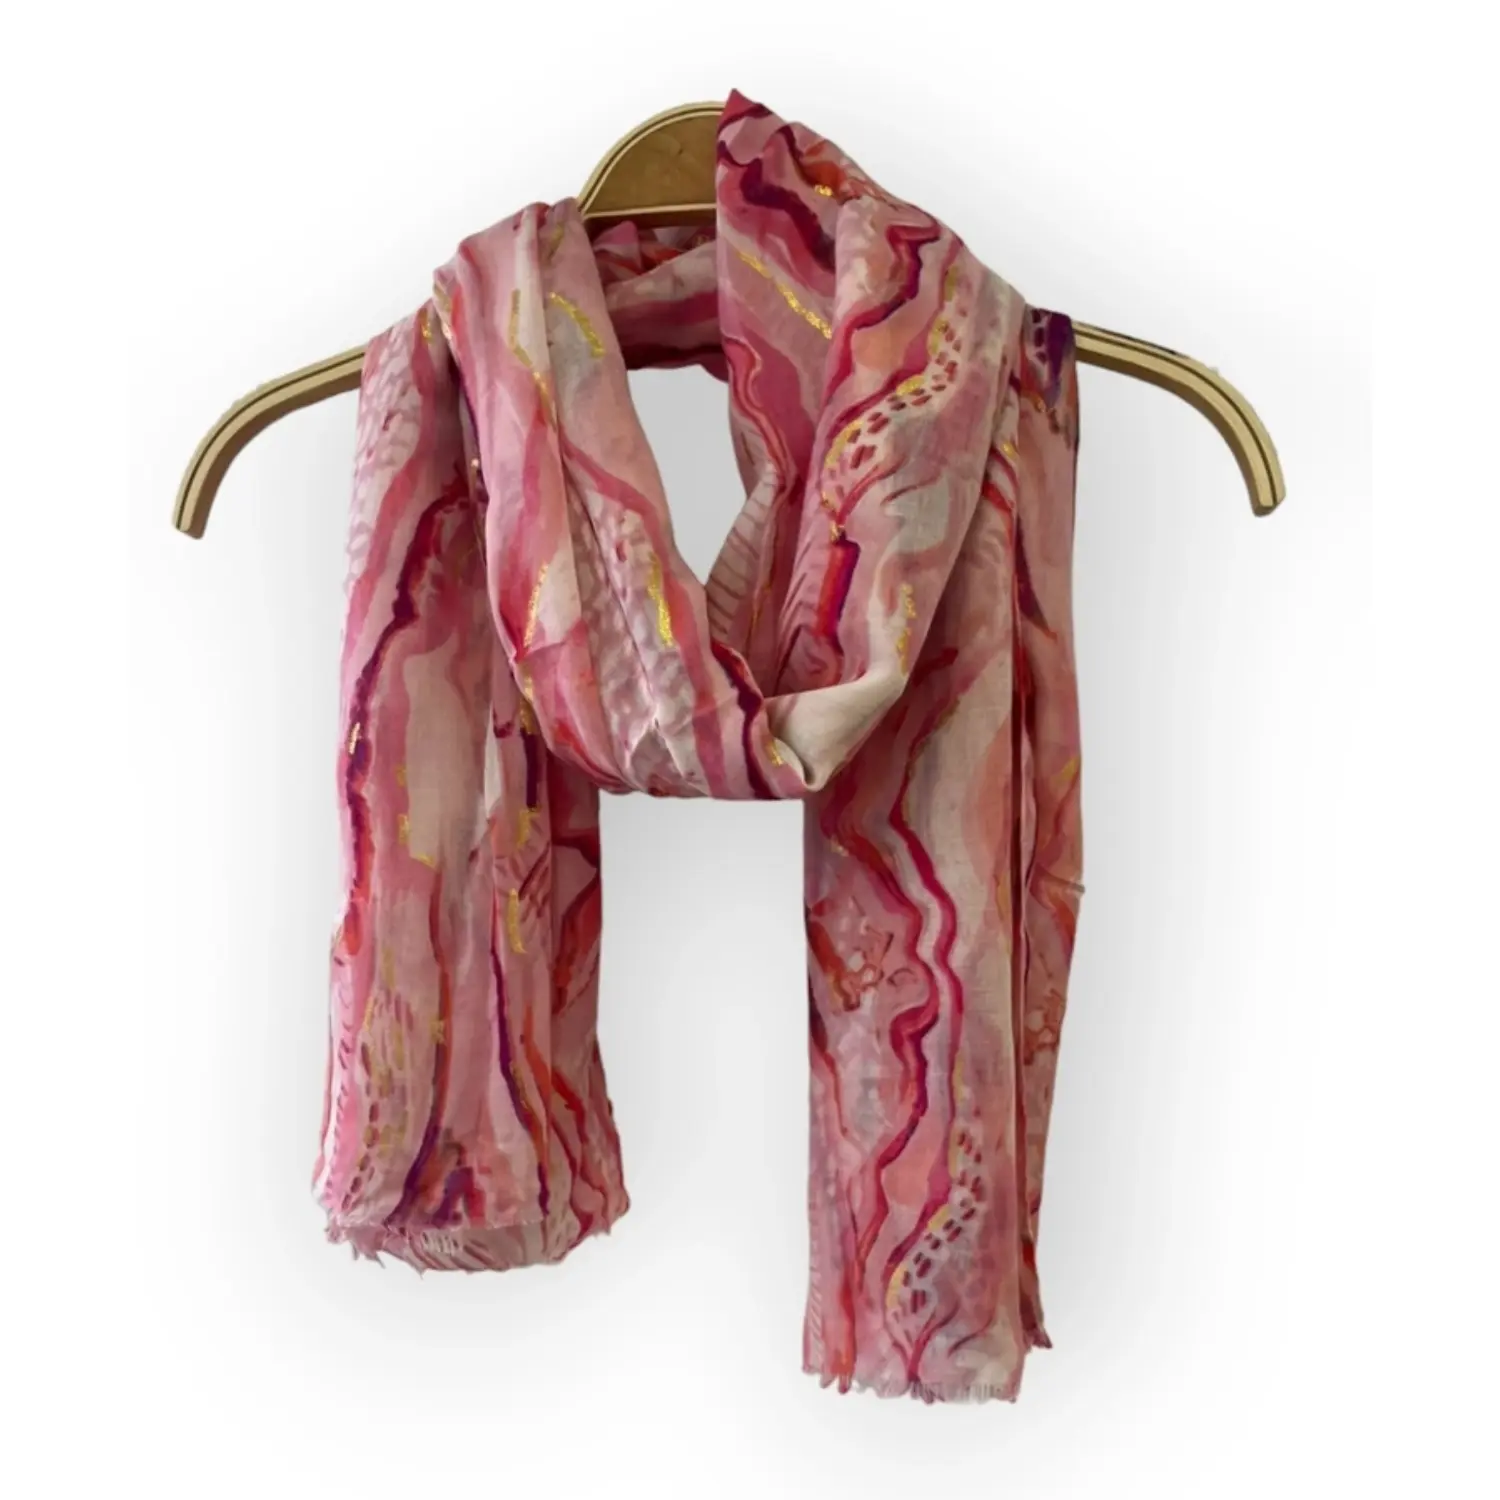 Lyserød / pink / rød tørklæde i bomuld og viskose